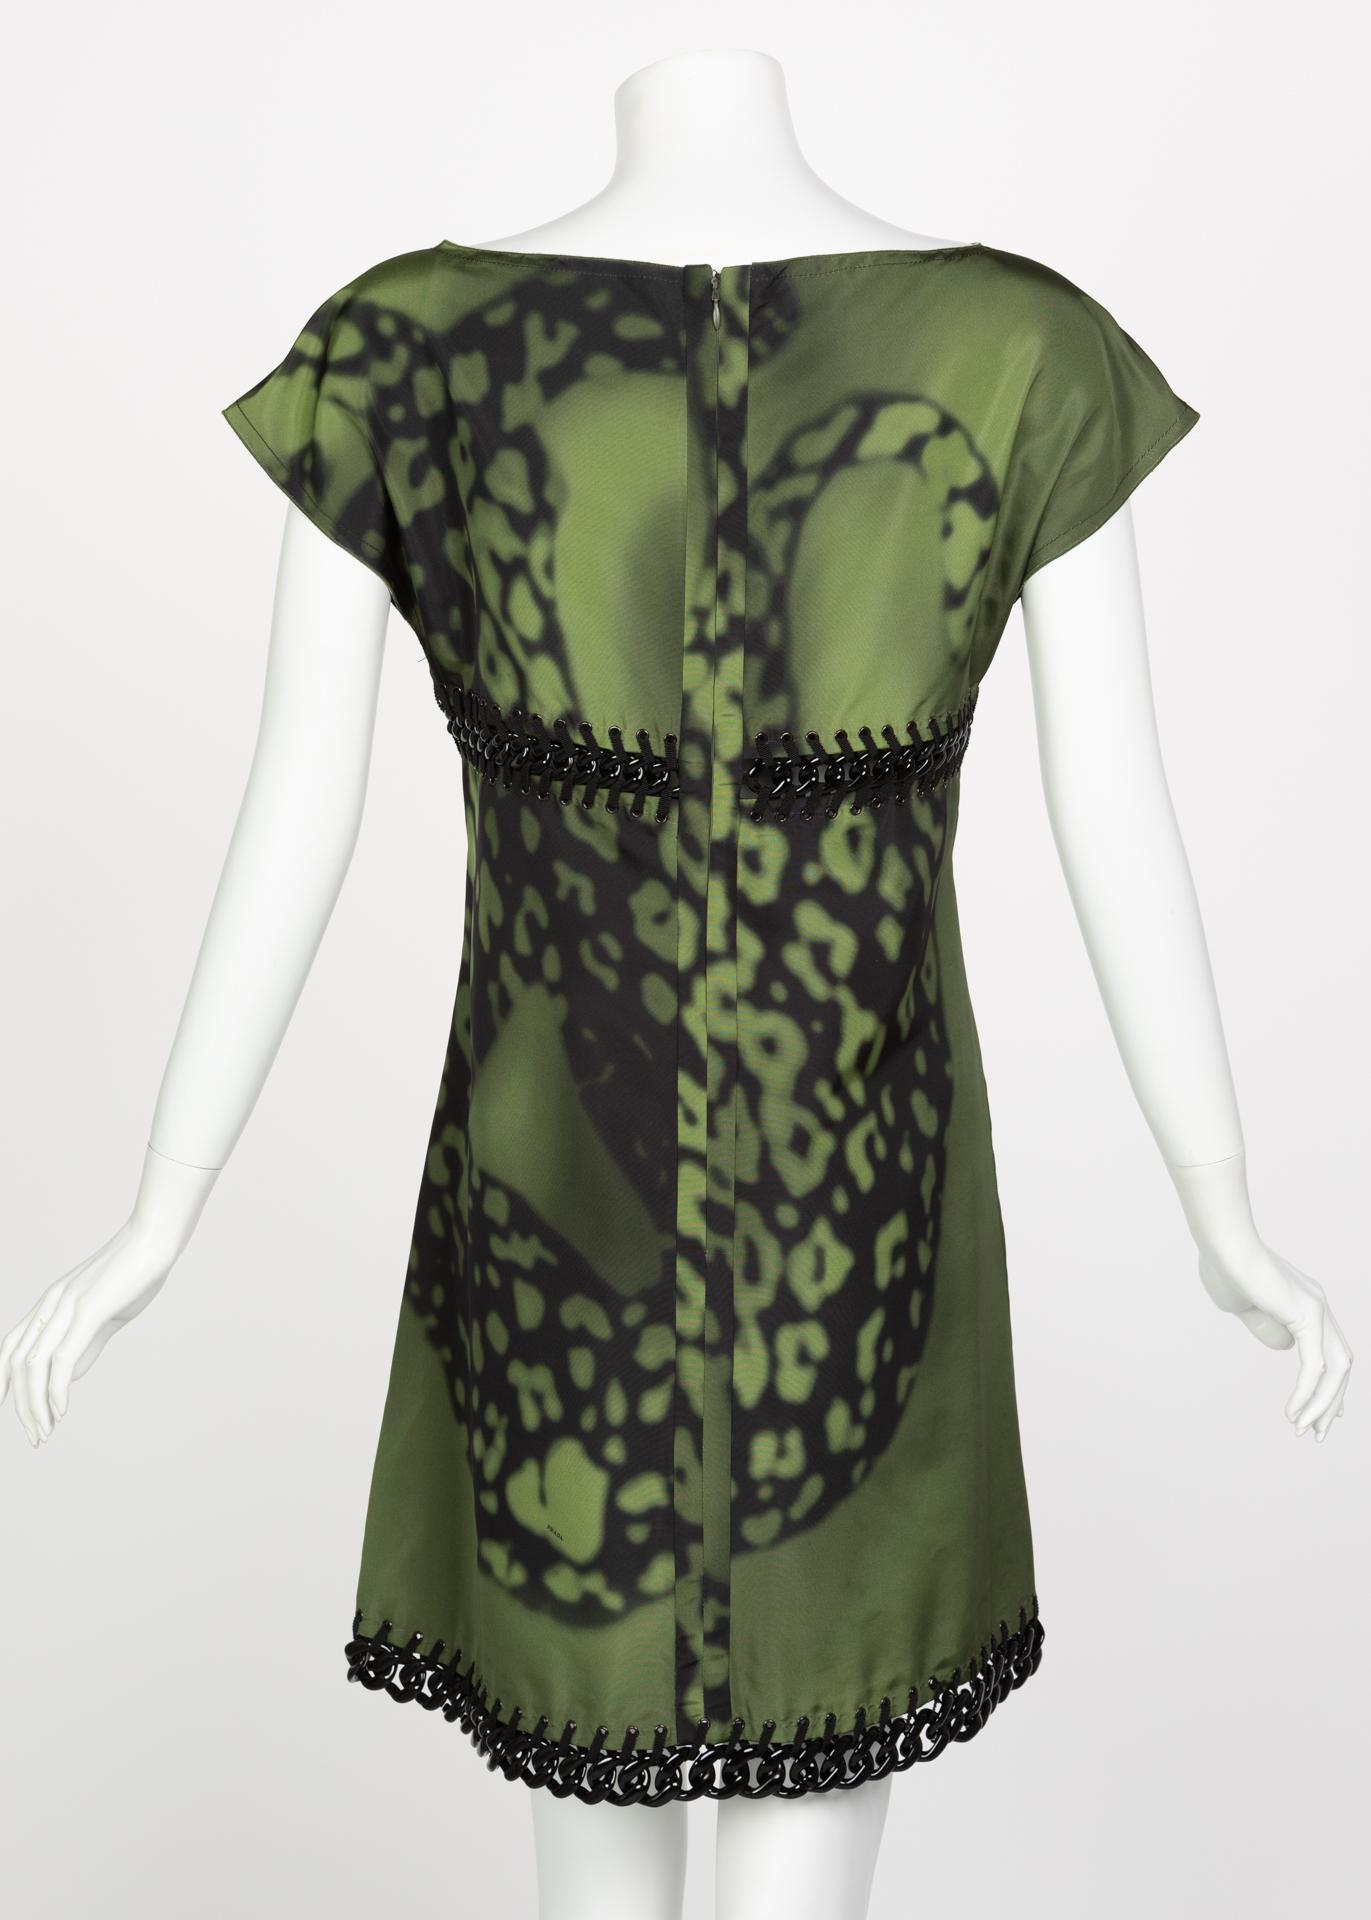 Women's Prada Green Black Chain Inset Printed Shift Dress, Resort 2009  For Sale